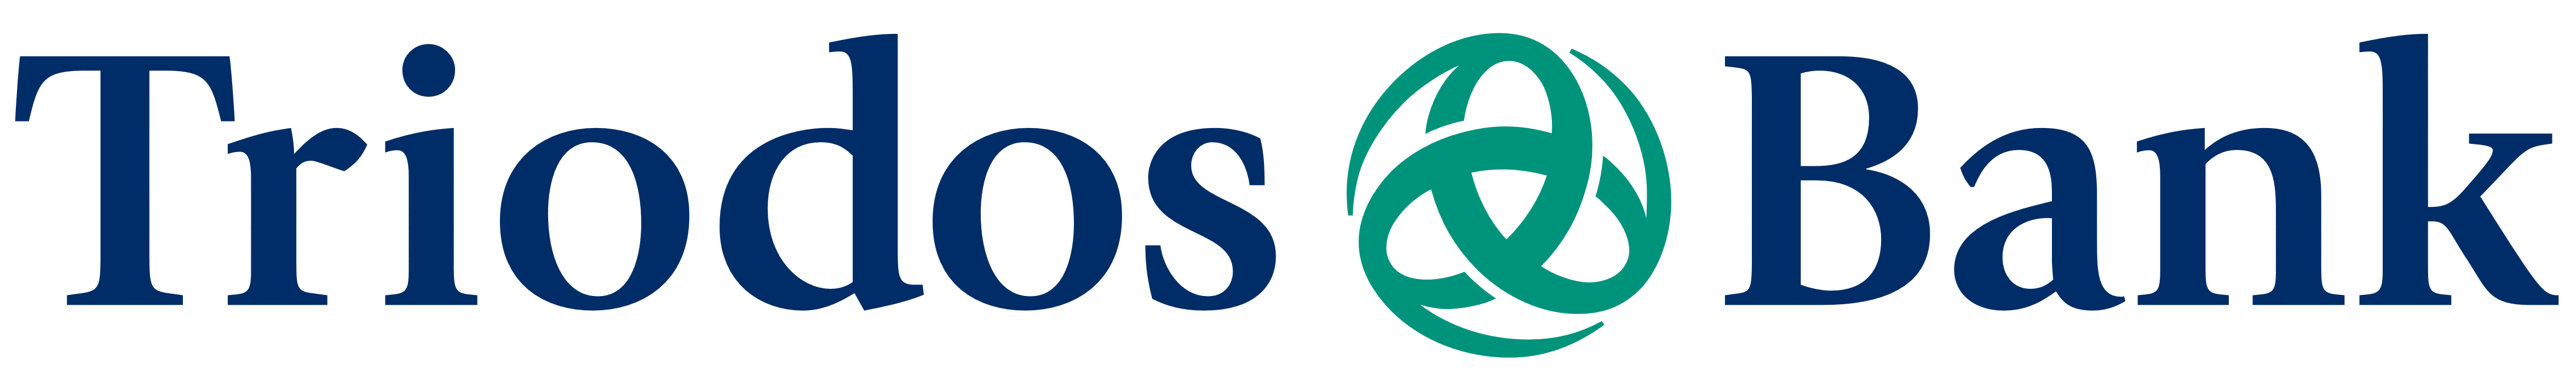 Triodos Bank logo, logotype